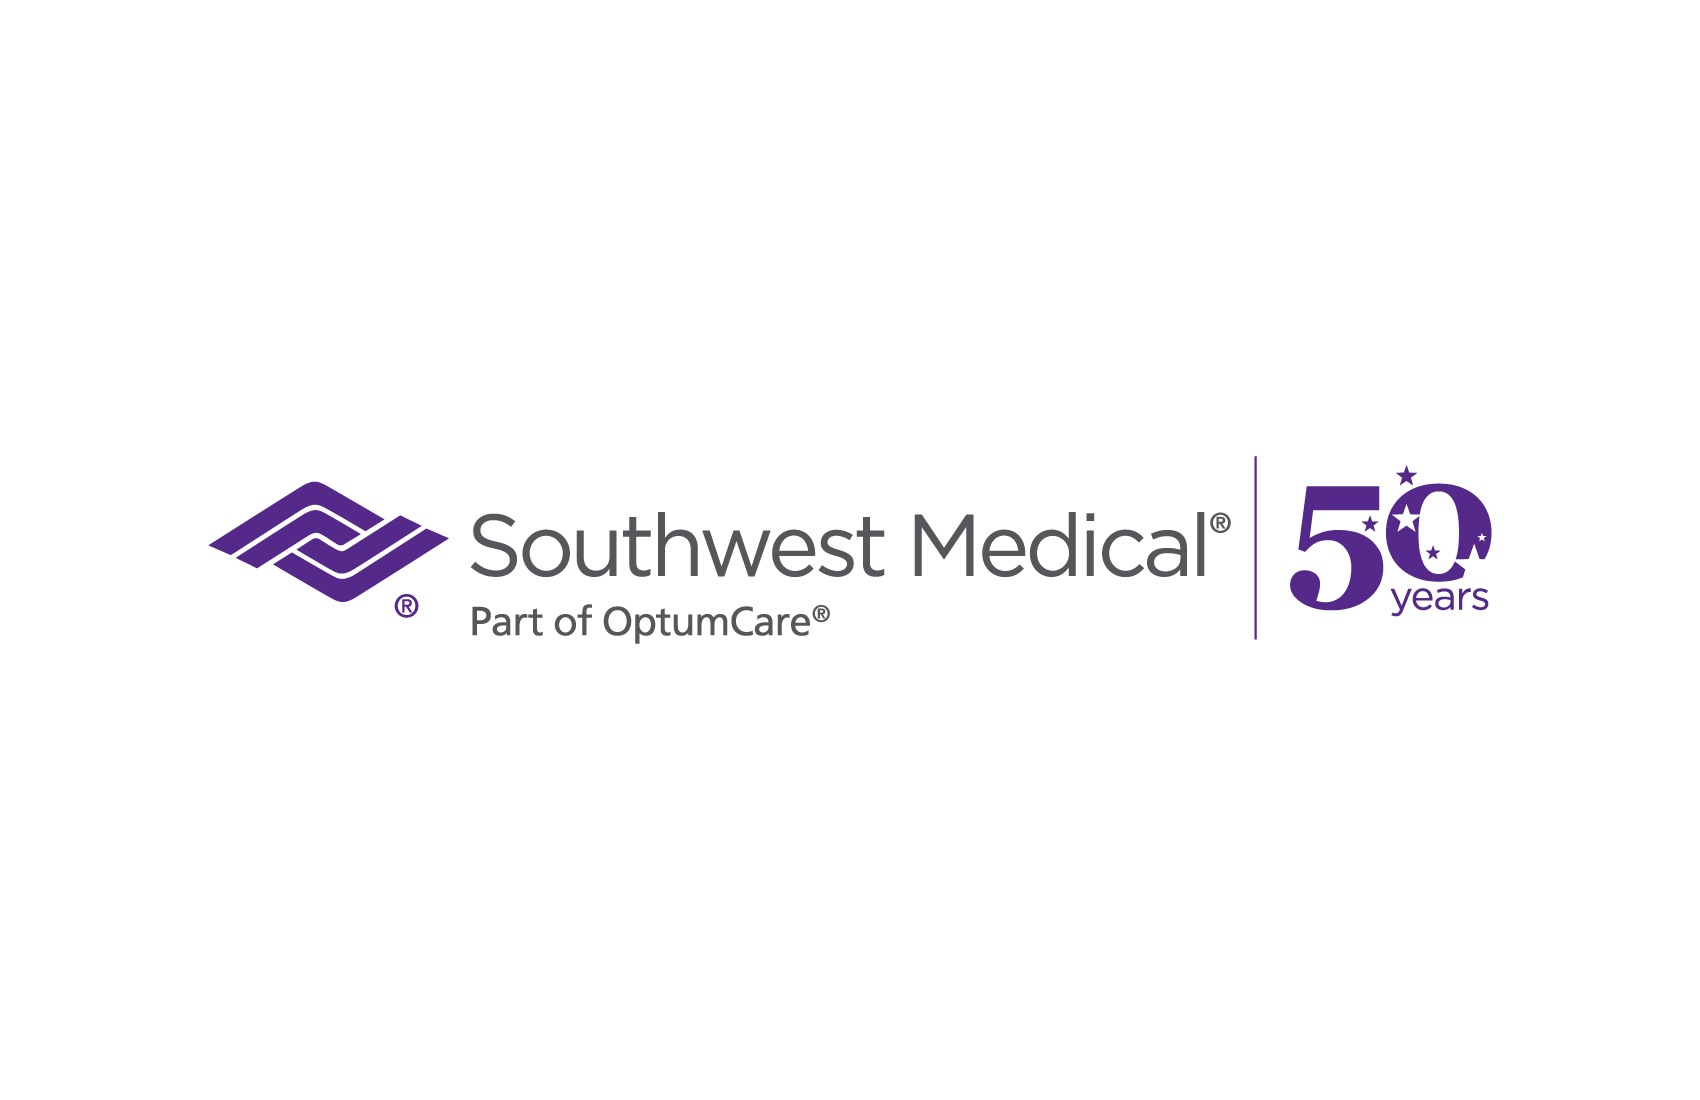 Southwest Medical